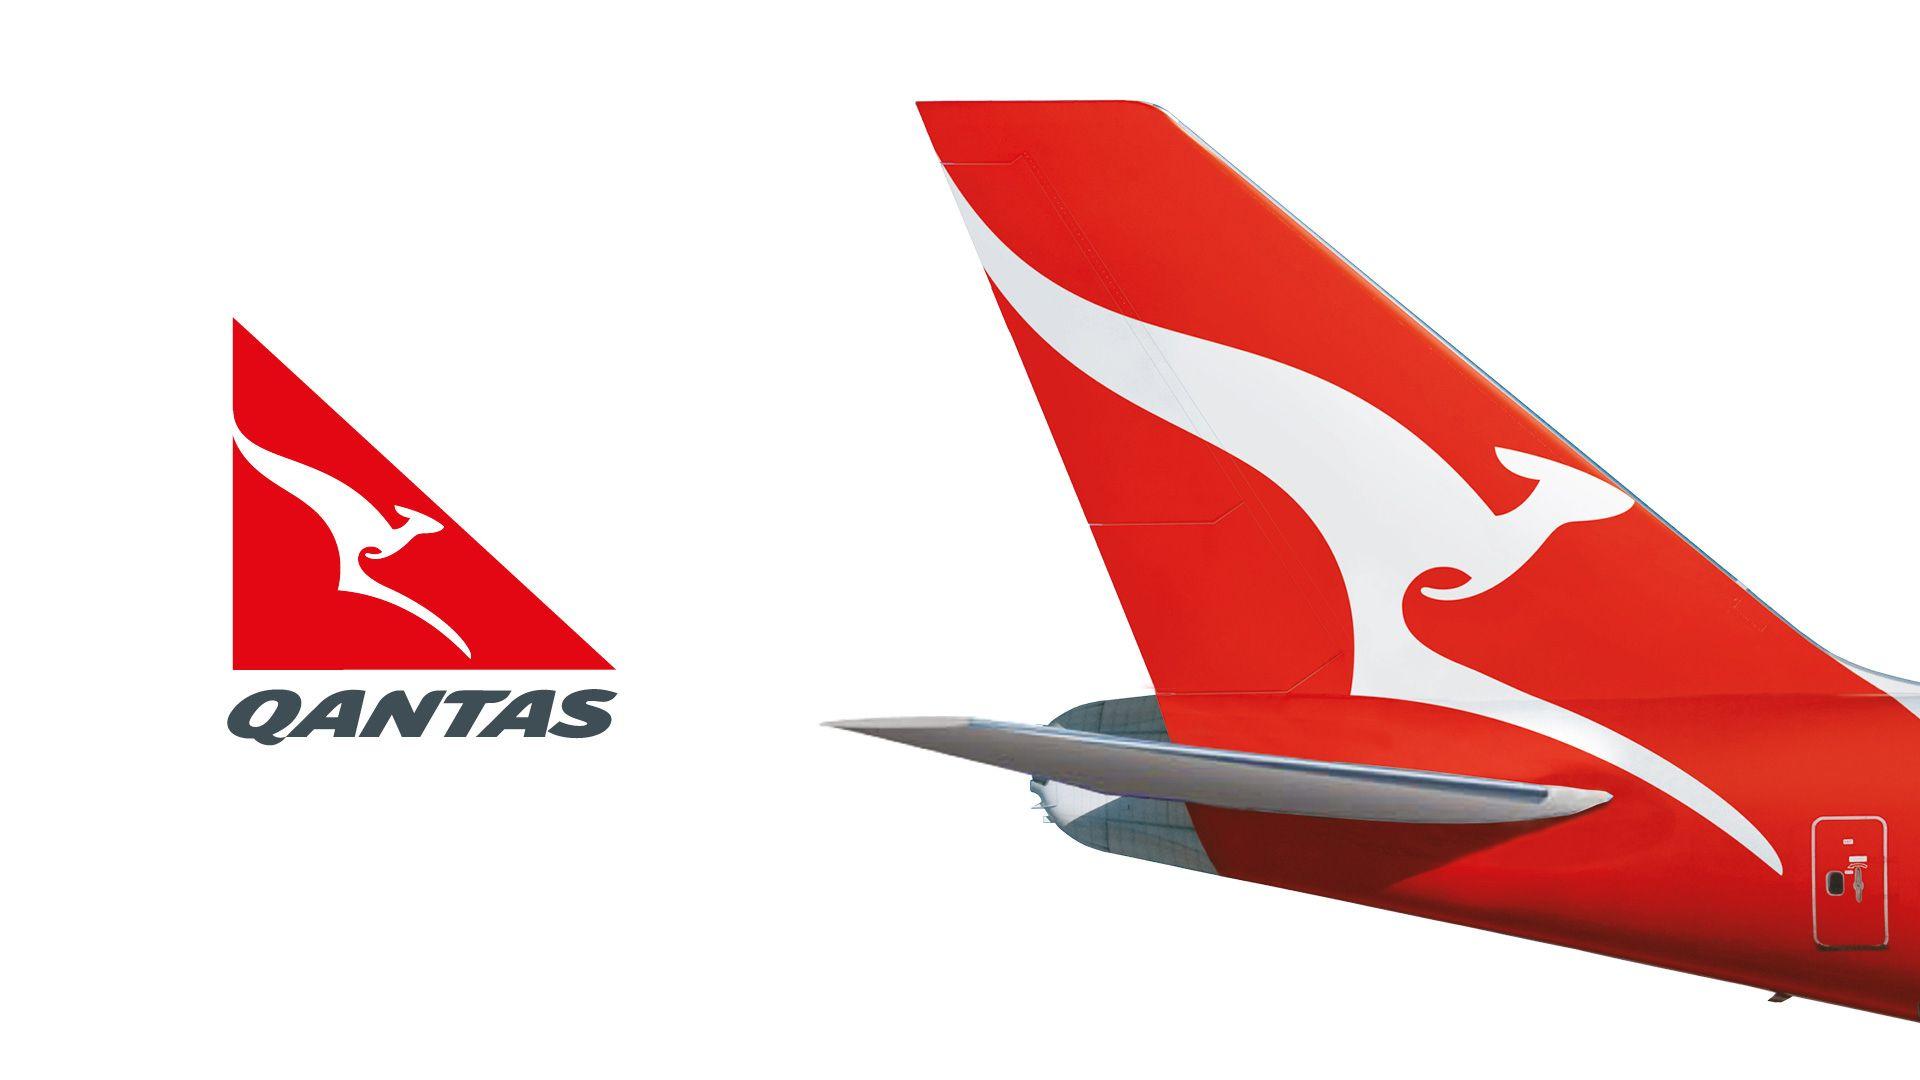 Airline with Kangaroo Logo - Hulsbosch